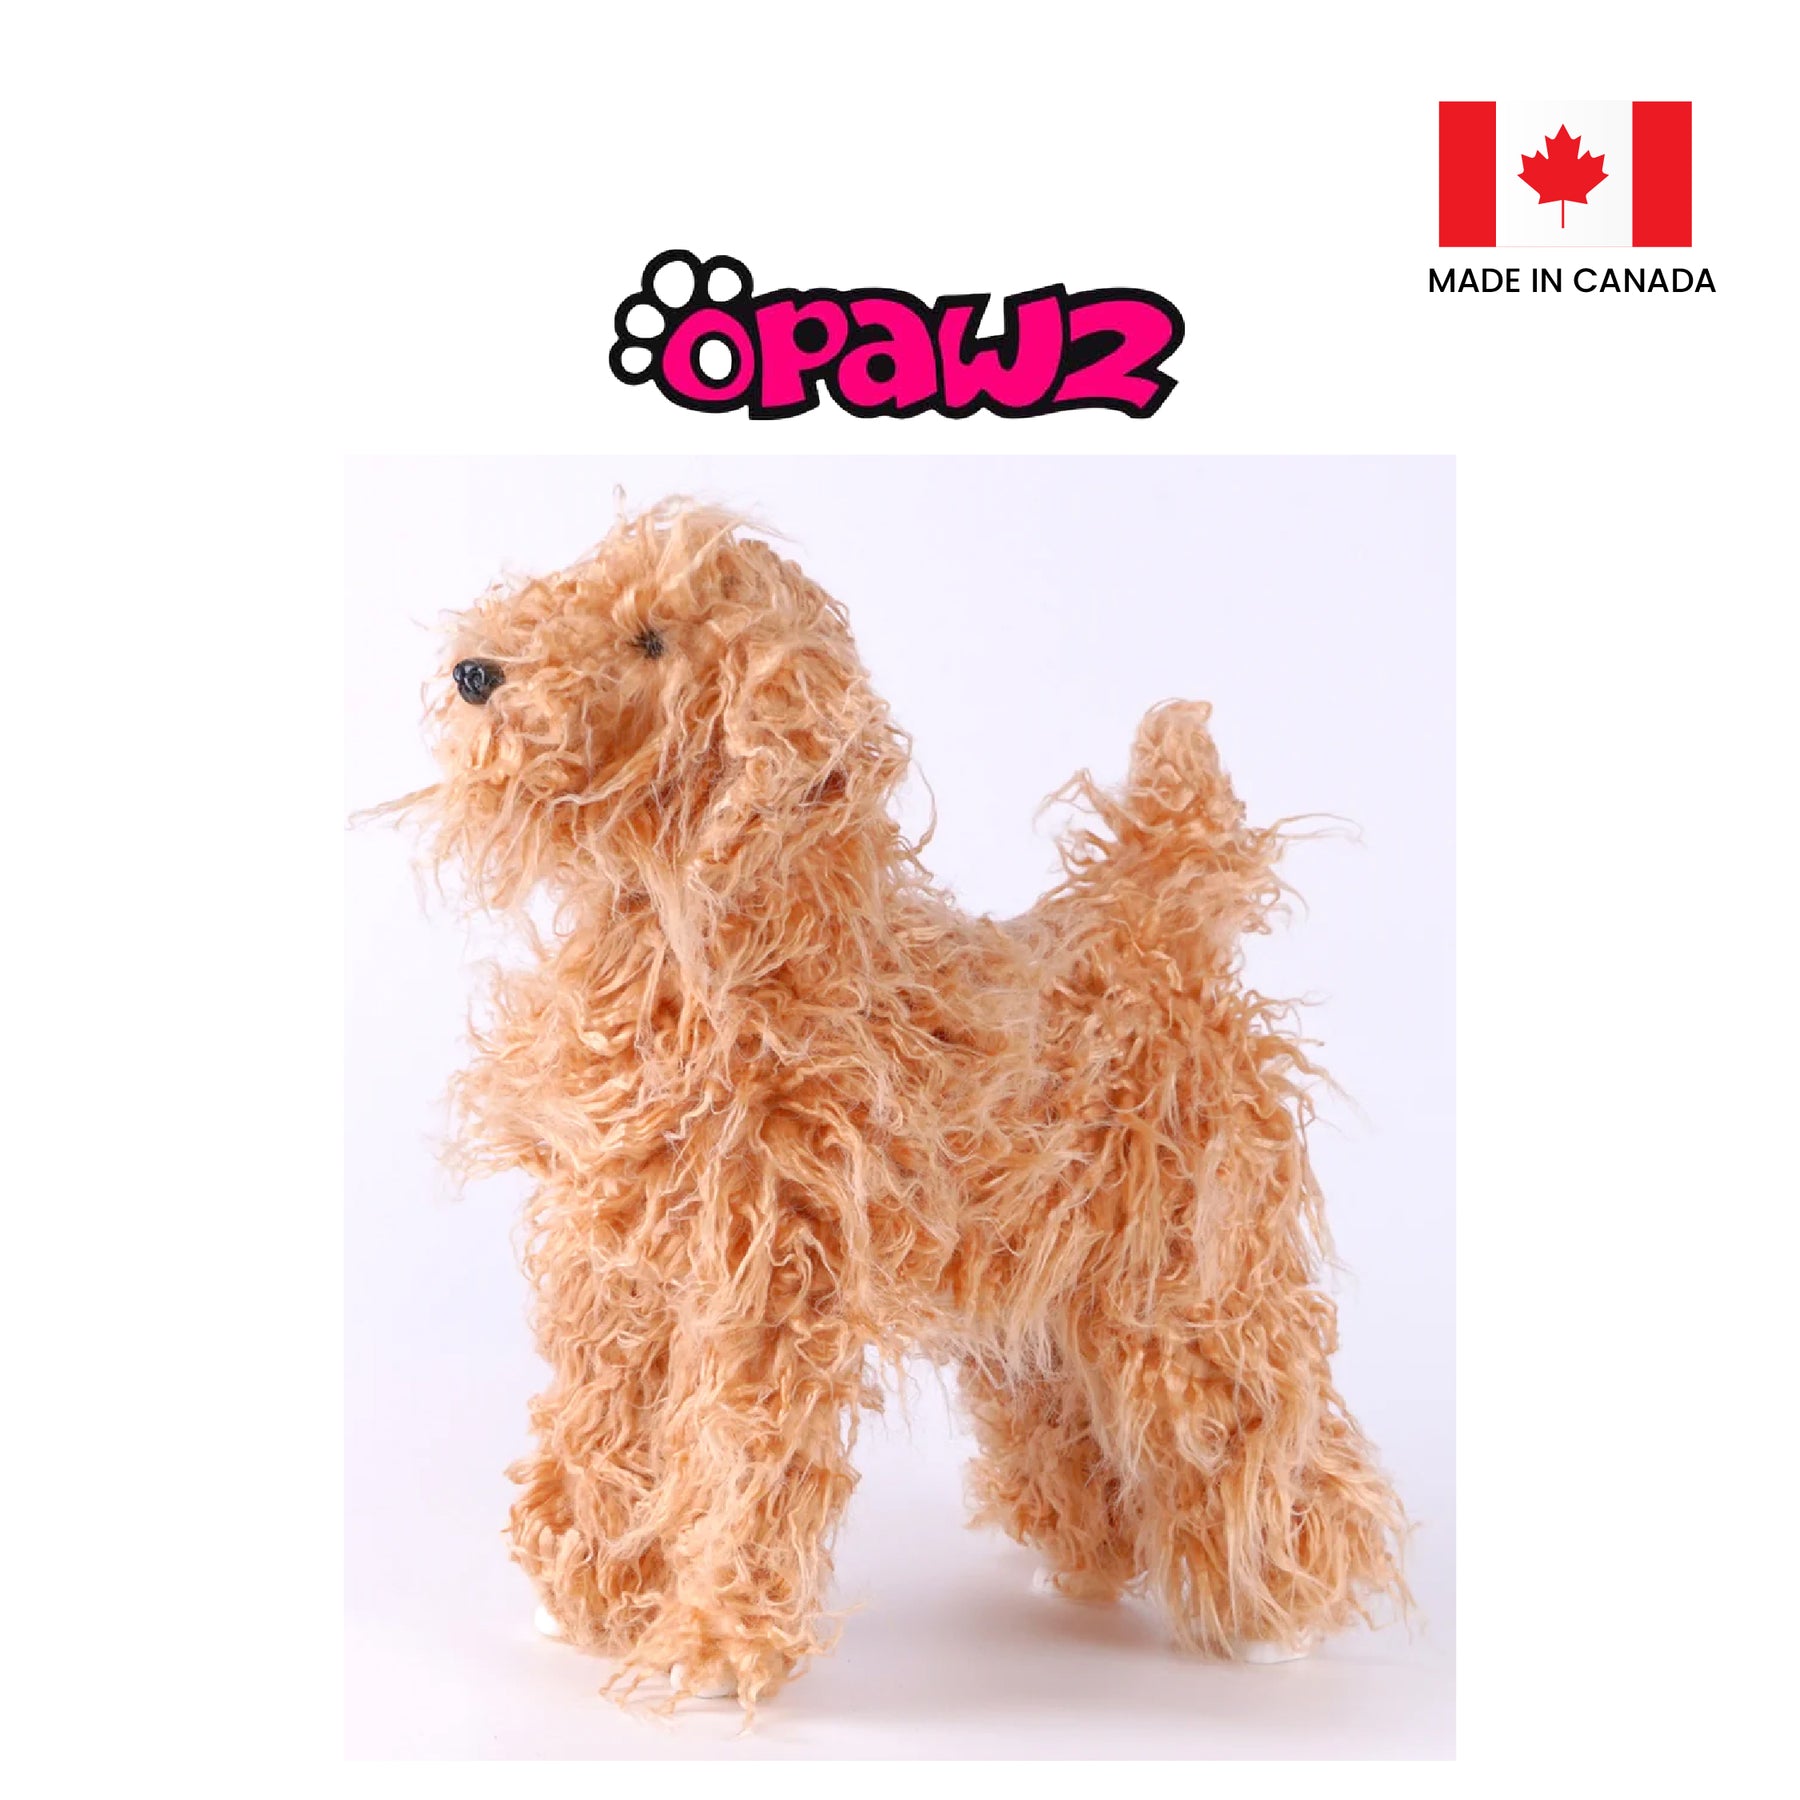 Dog Model Dog Mannequin + Brown Wig for Pet Clip Dog Grooming Practice  Training